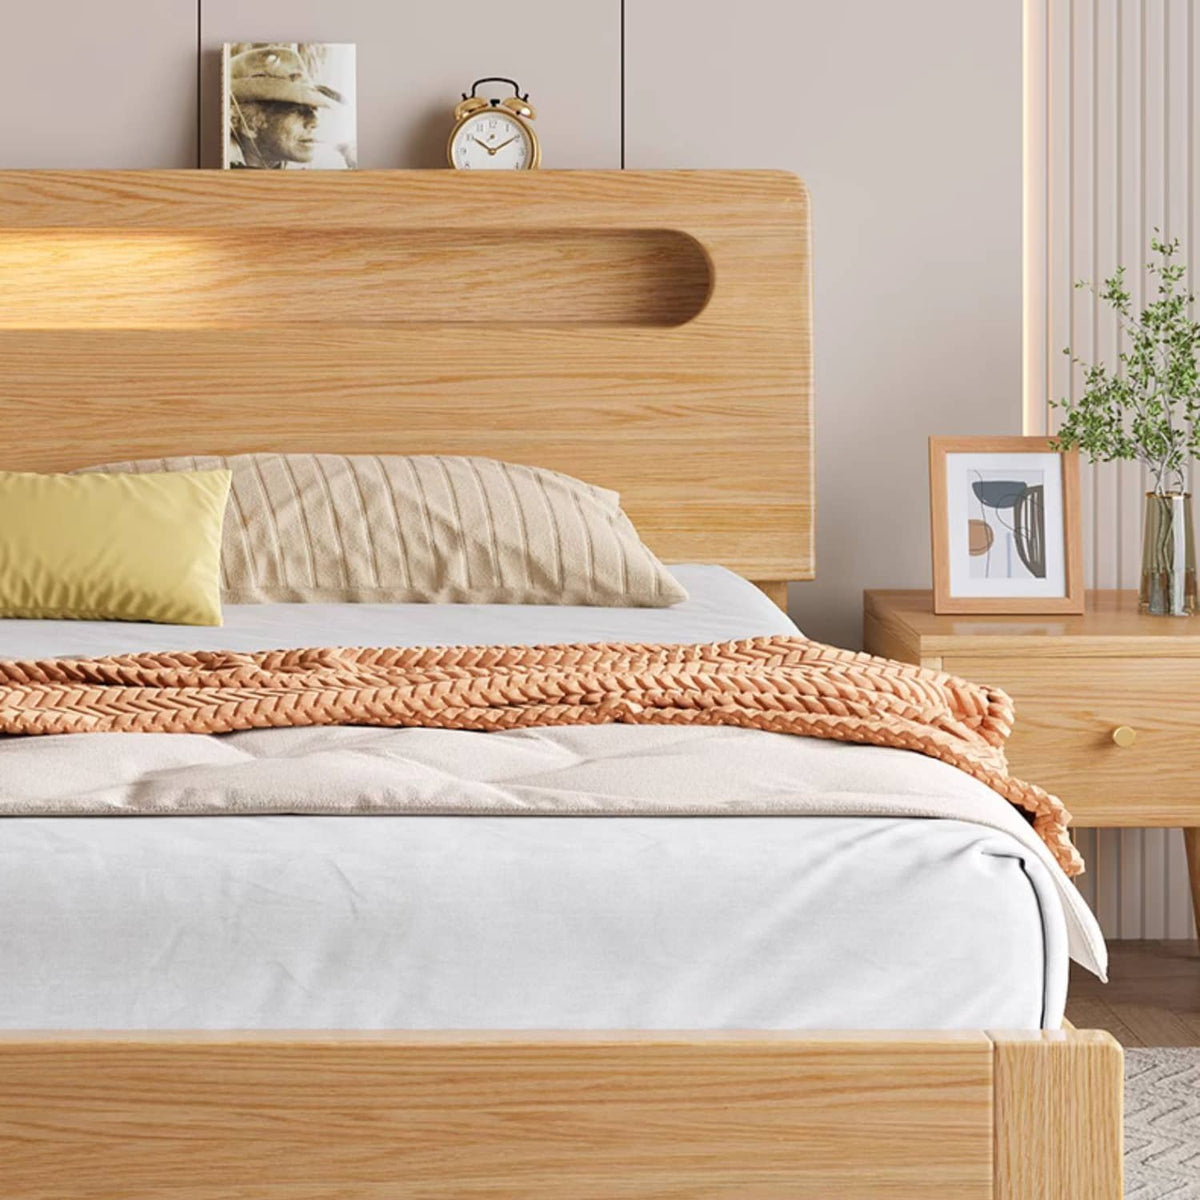 Premium Natural Rubber Wood Pine Bed Frame - Sturdy & Stylish Design hmak-237